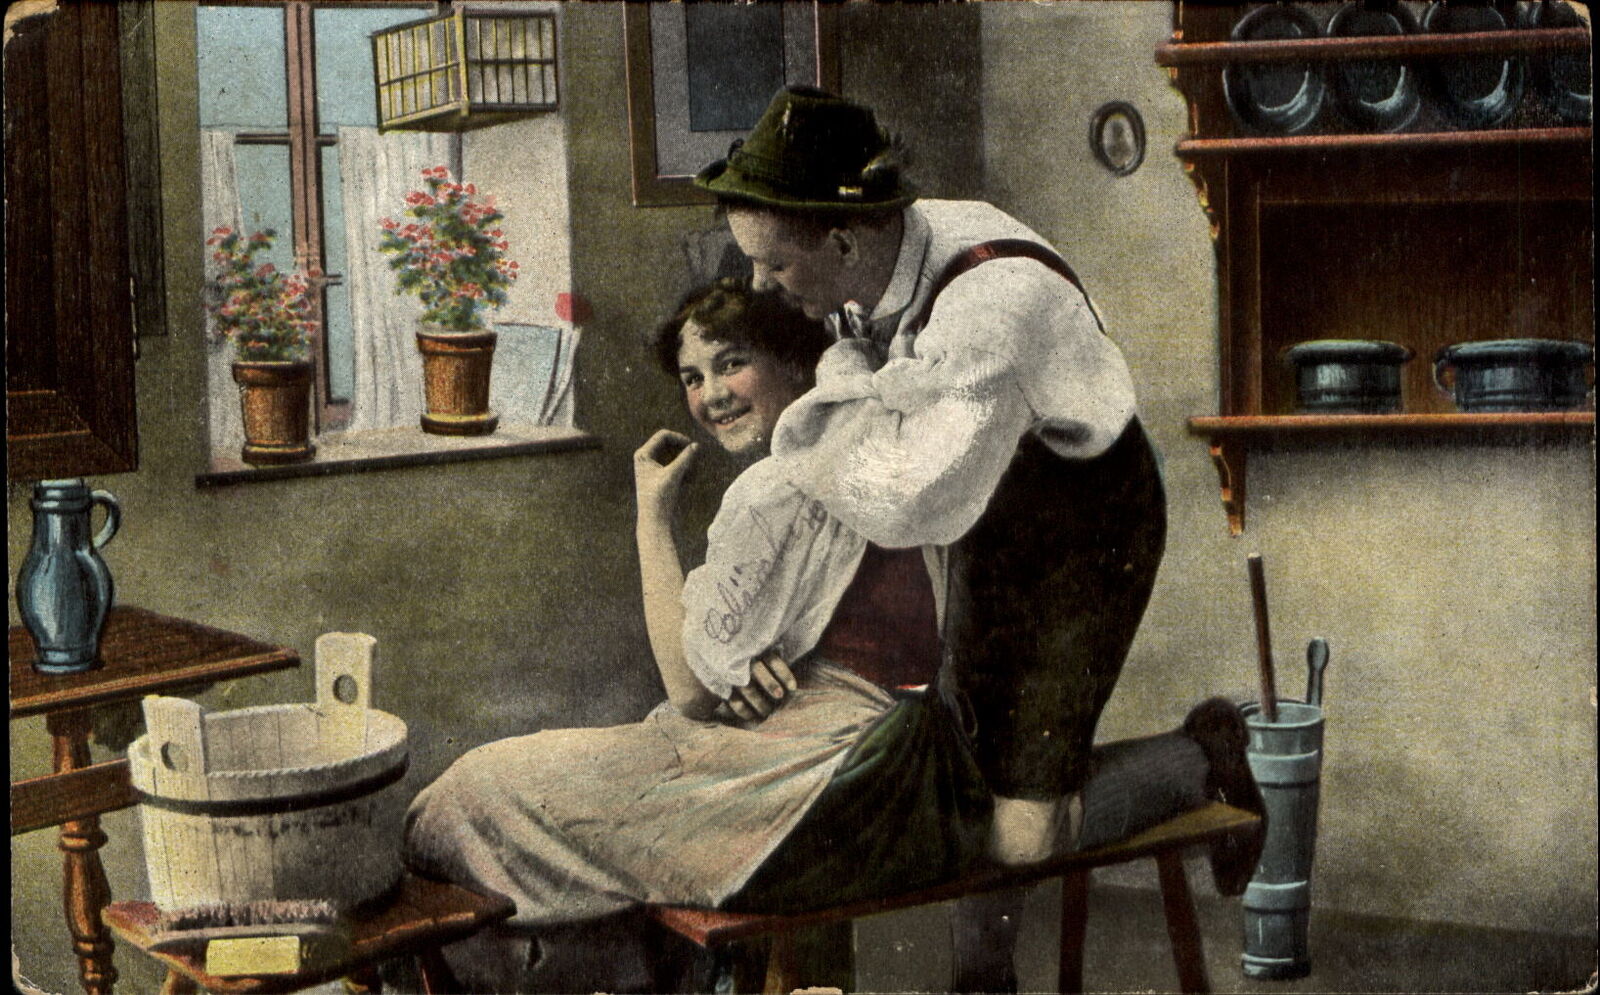 Swiss couple flirting dirndl skirt Tyrolean hat wash tub ~ mailed 1908